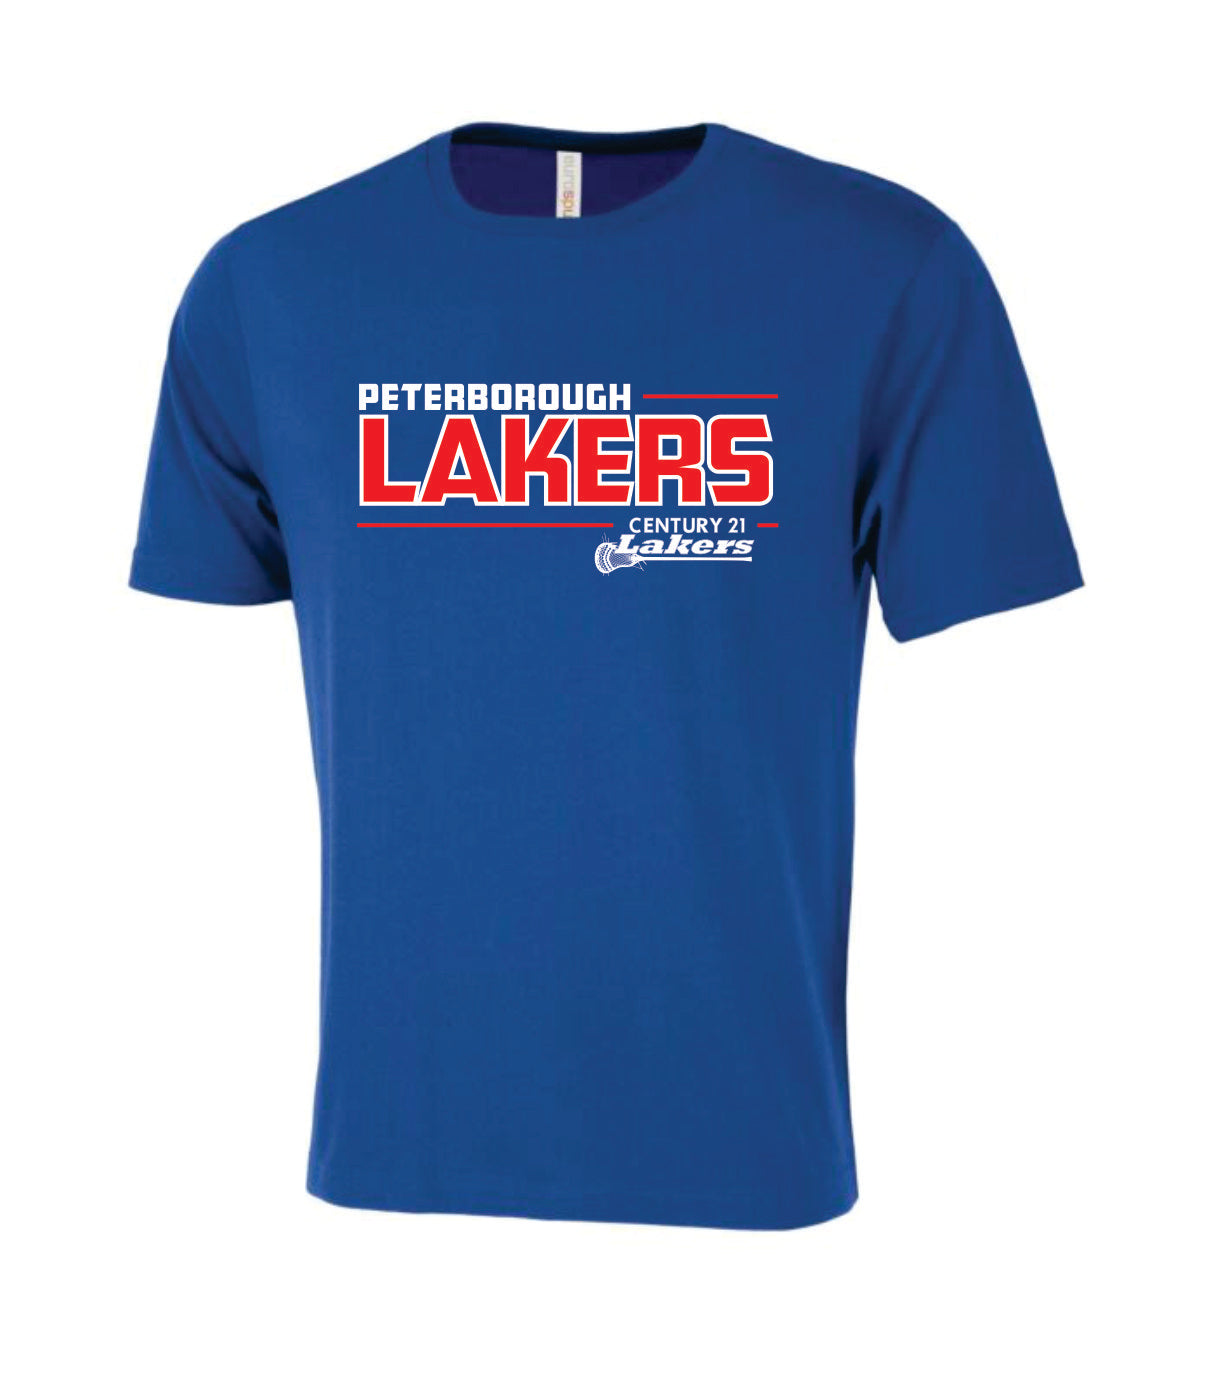 Peterborough Lakers Crewneck Blue T-Shirt - Youth